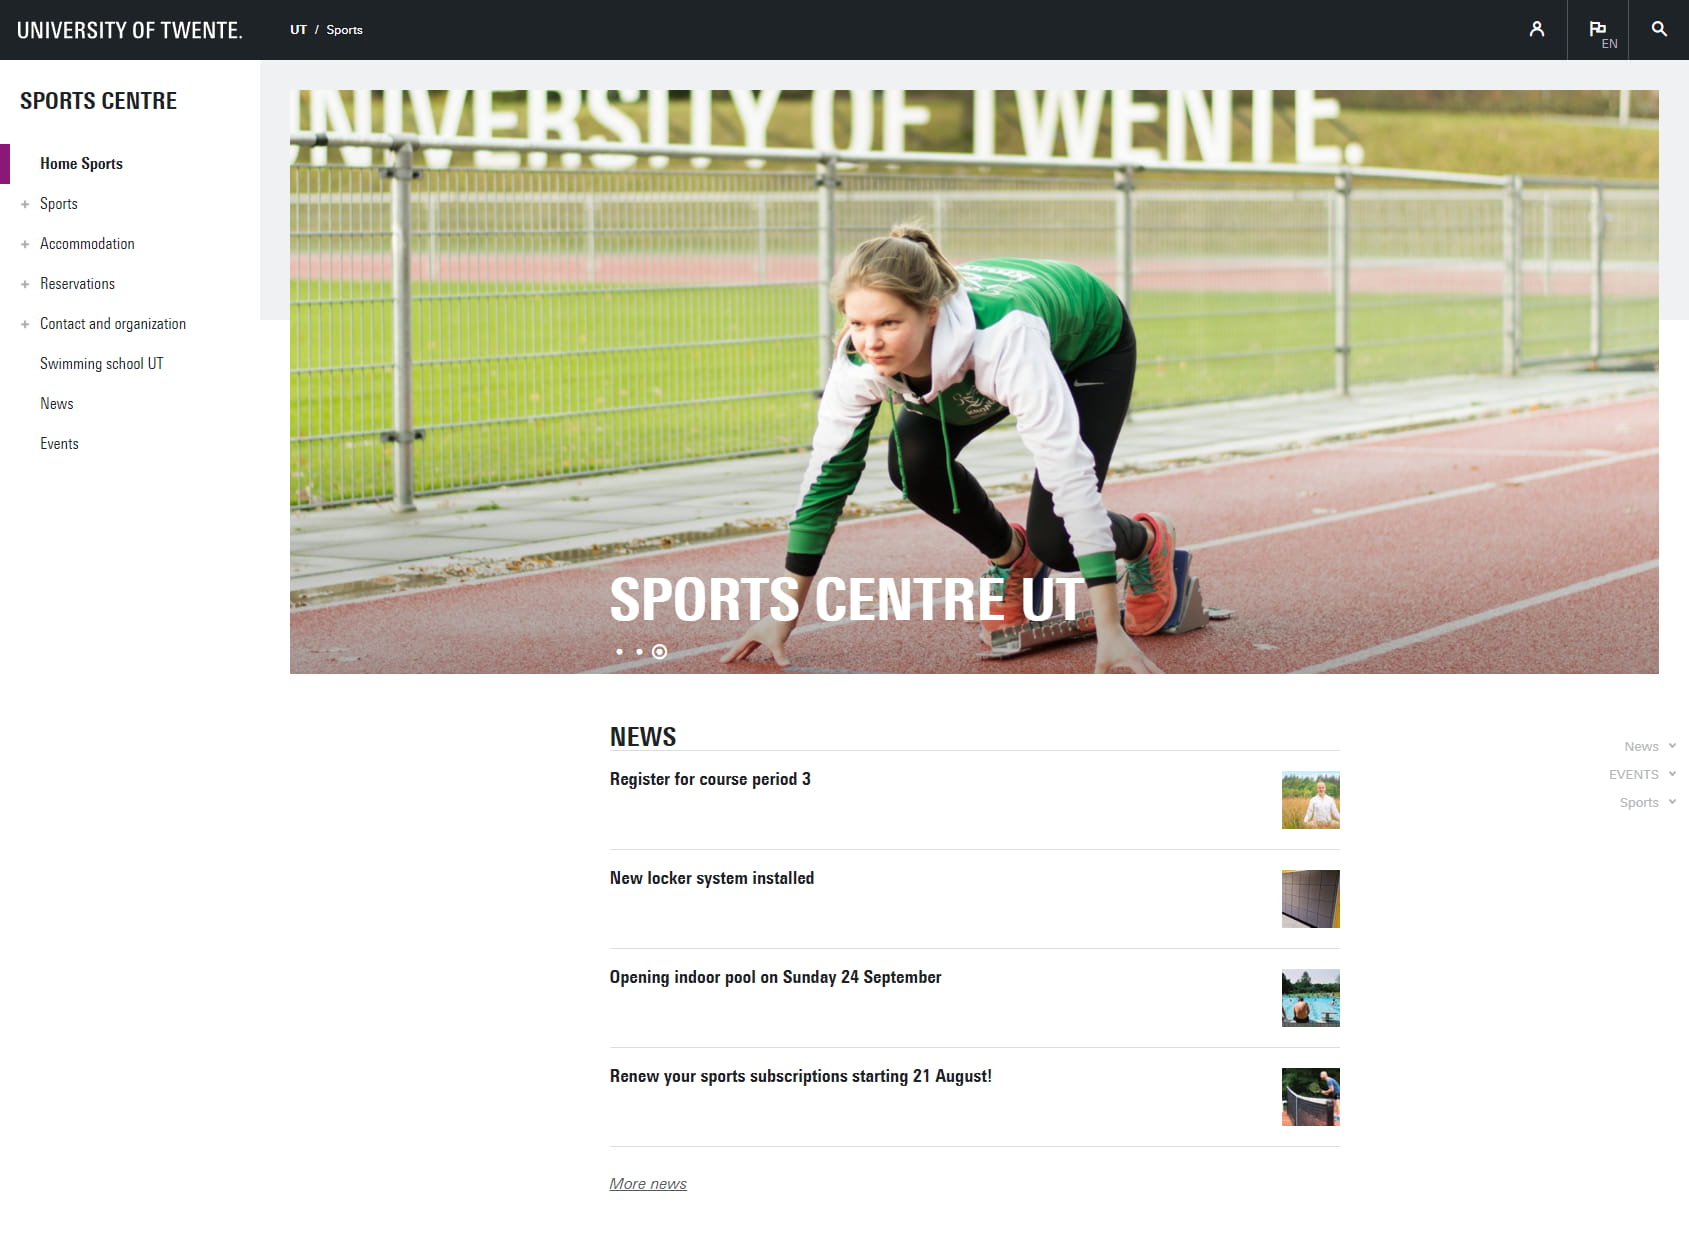 Sports Centre - University of Twente